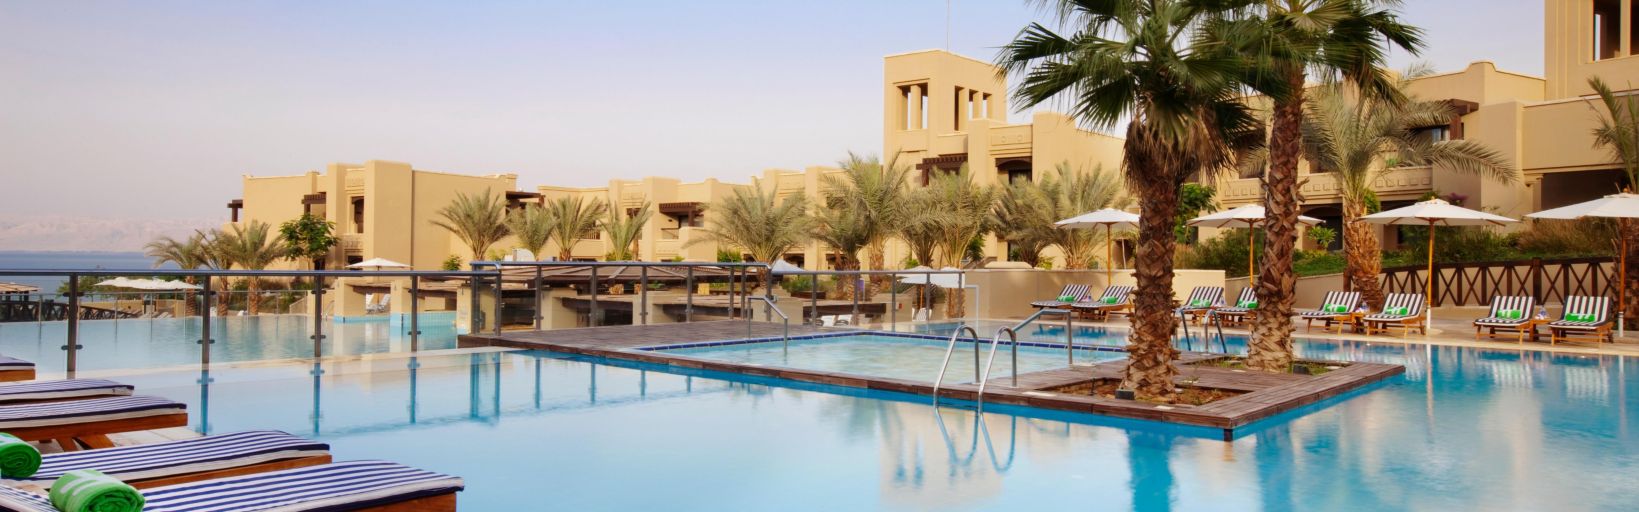 IHG Point Breaks Holiday Inn Dead Sea Resort